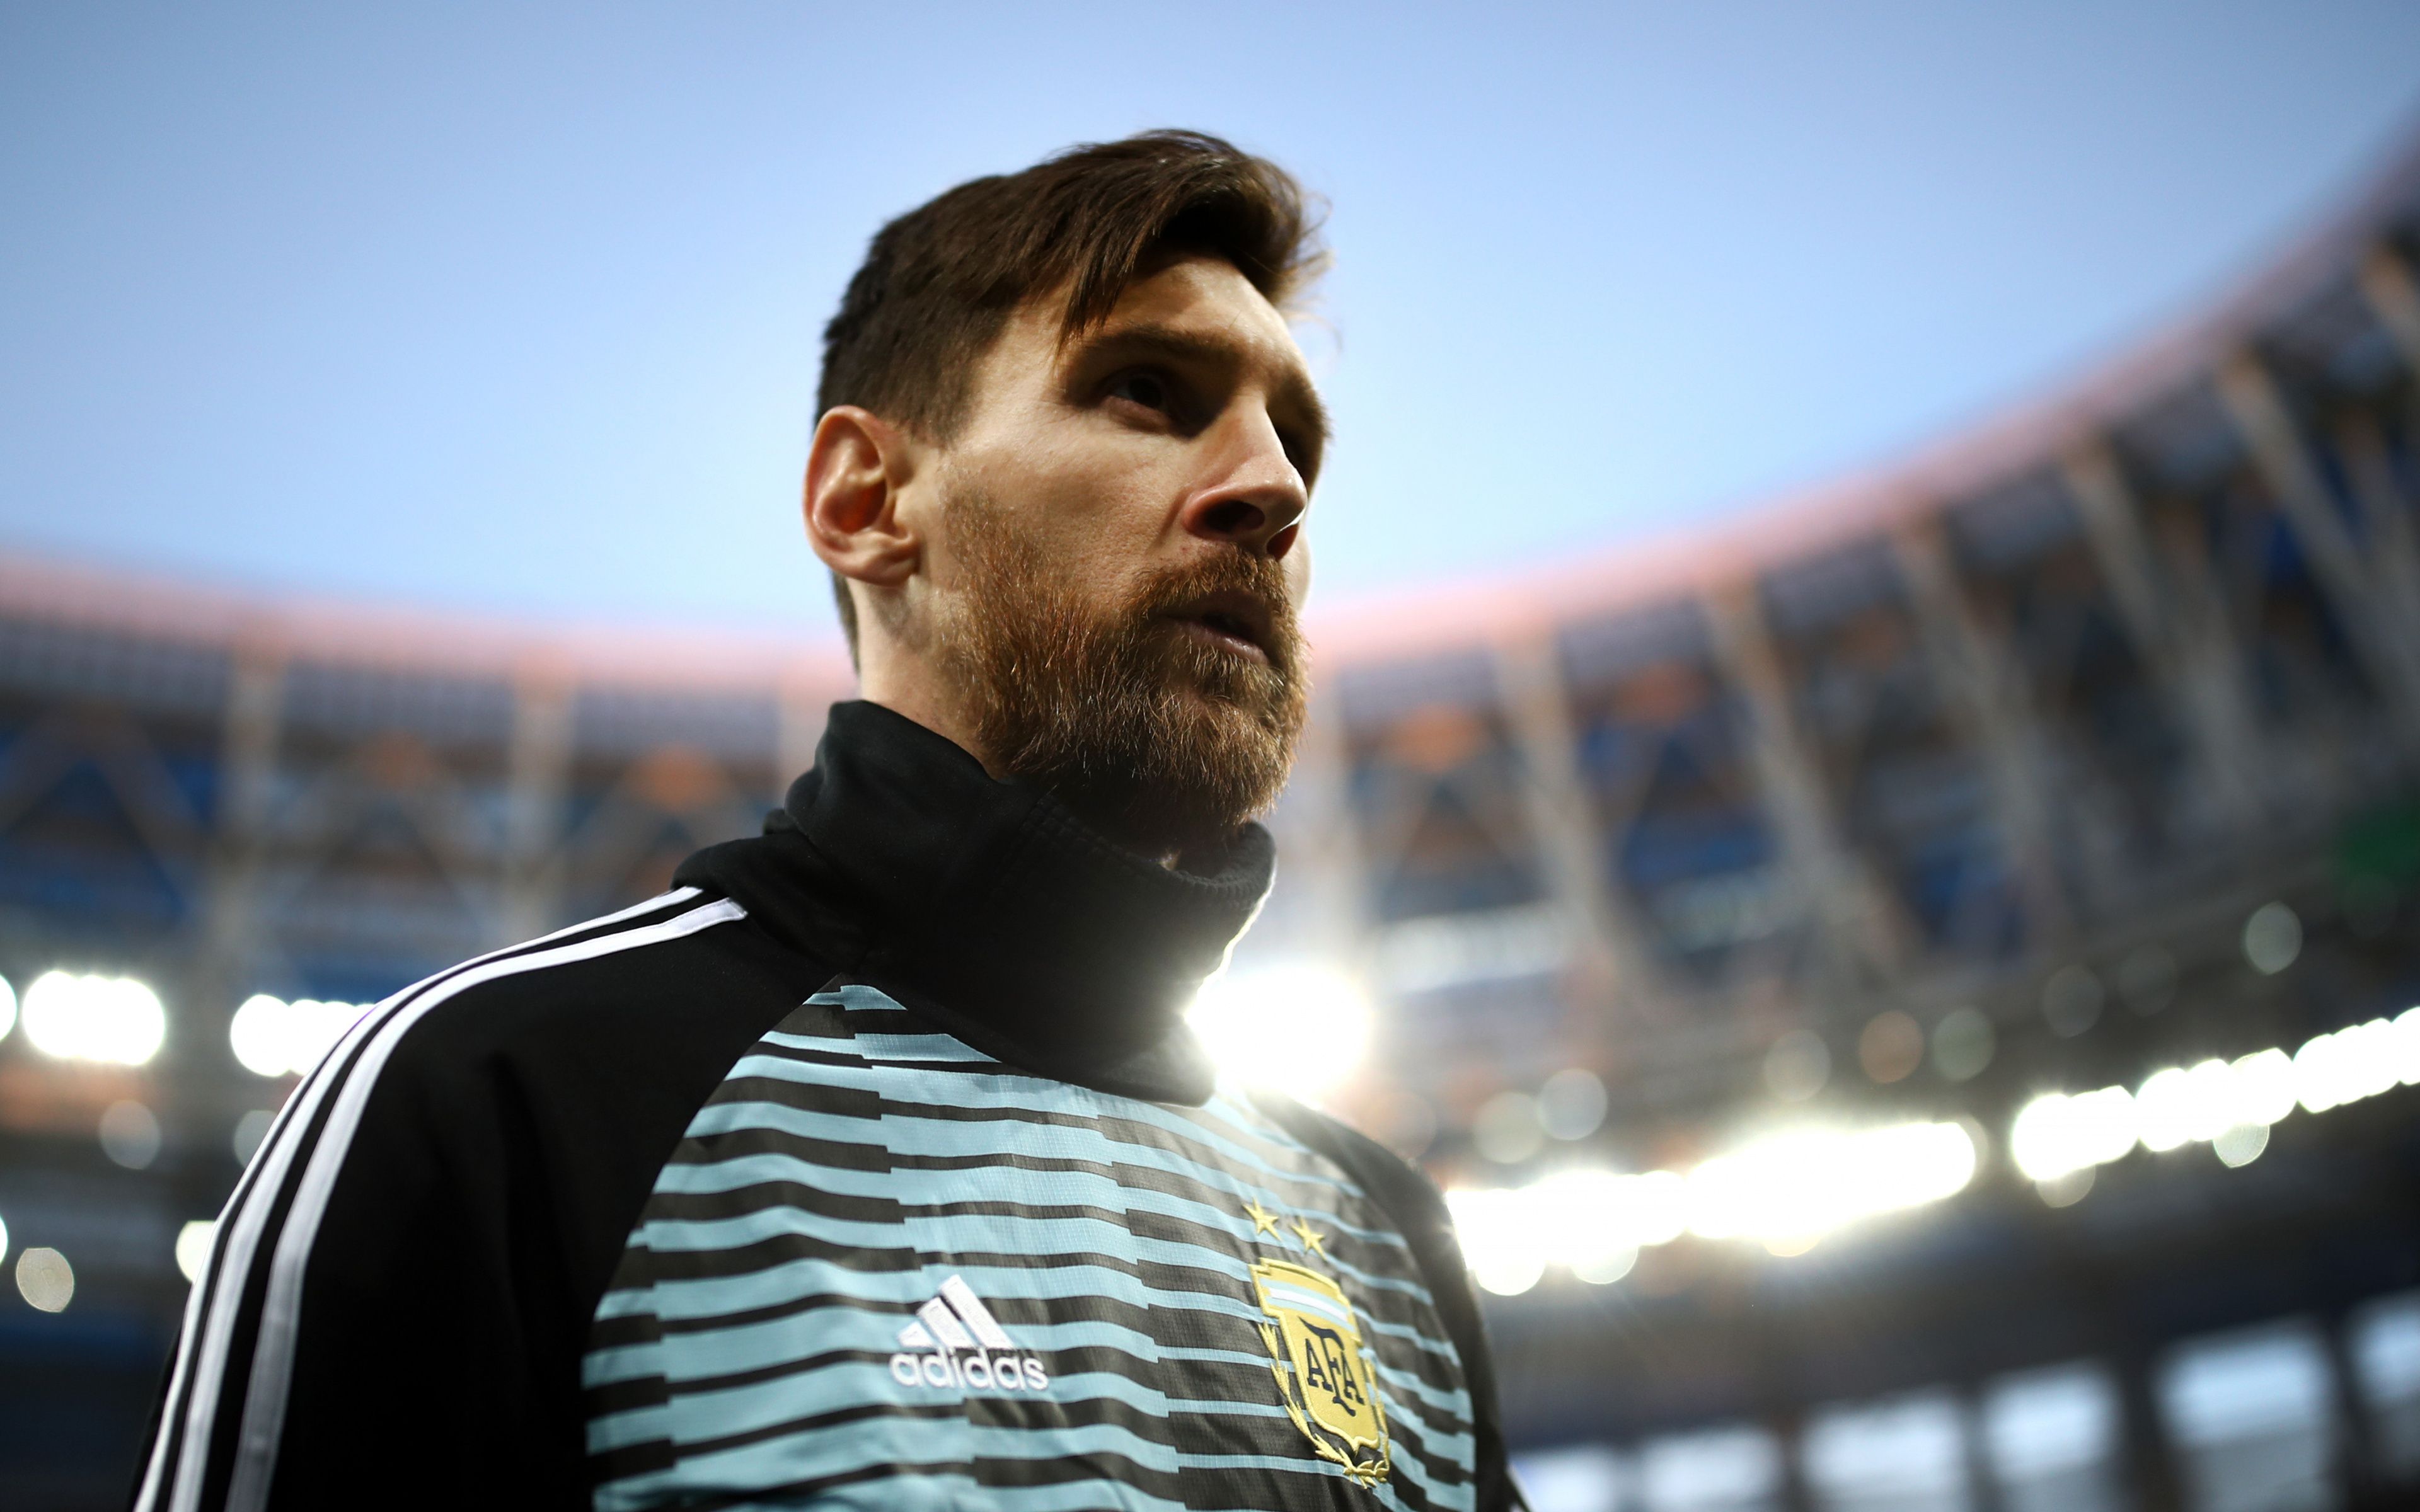 Download Lionel Messi, footballer, celebrity wallpaper, 3840x 4K Ultra HD 16: Widescreen